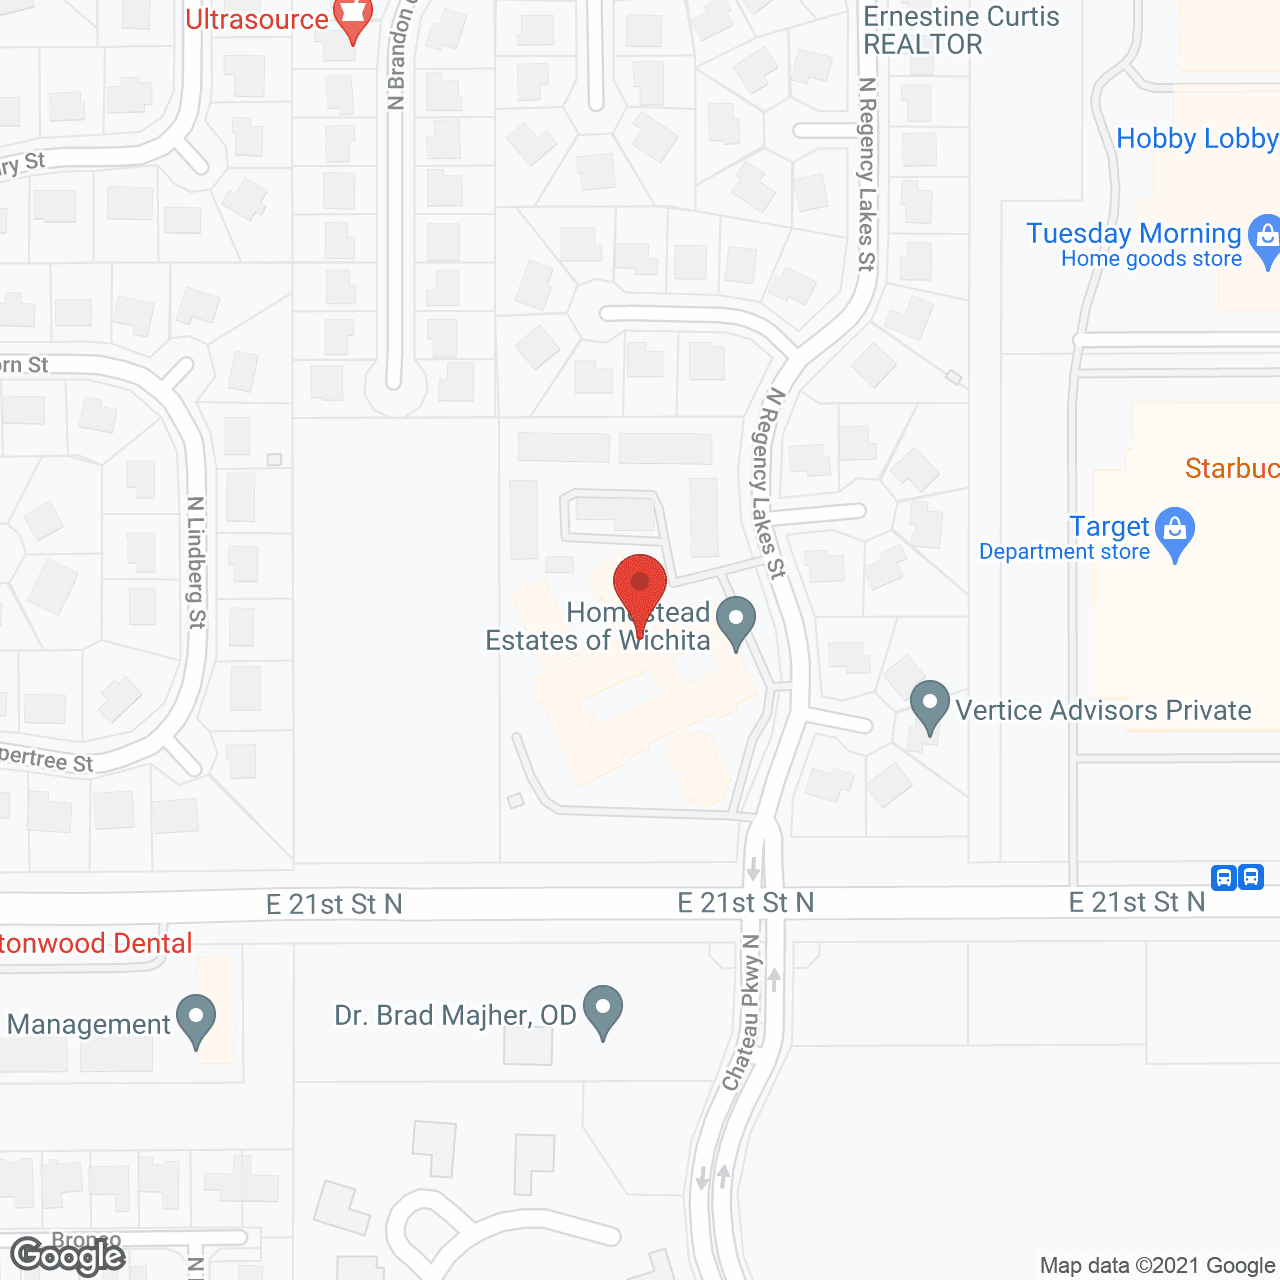 Homestead Estates of Wichita in google map